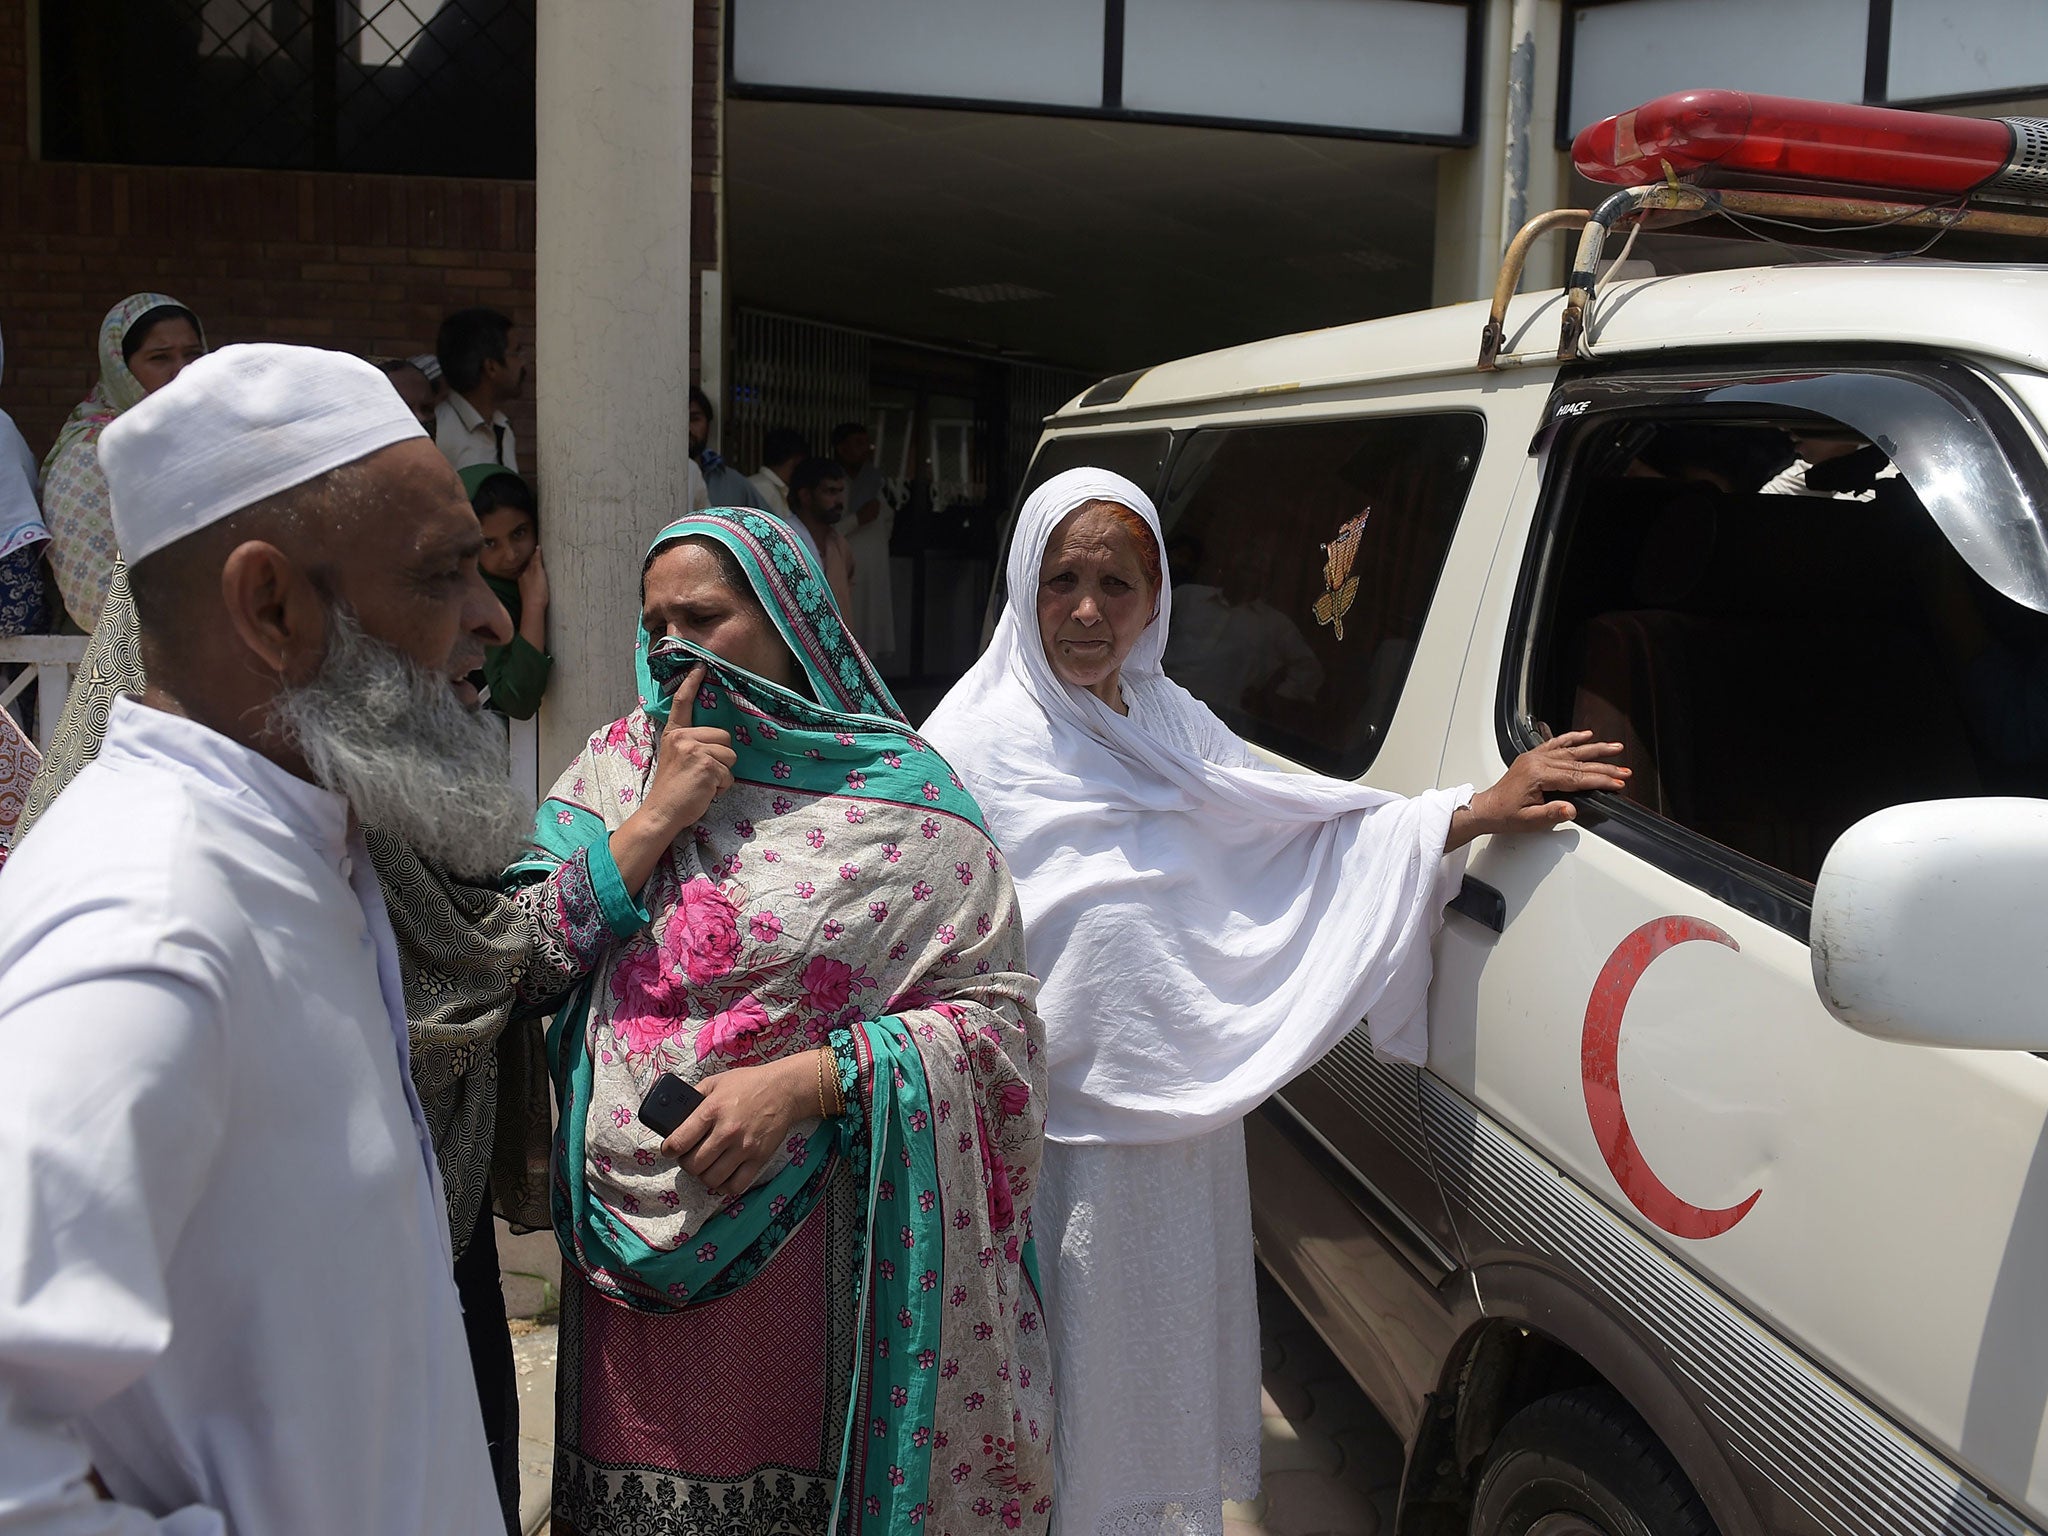 &#13;
Relatives stand alongside an ambulance carrying Ms Sadaqat's body &#13;